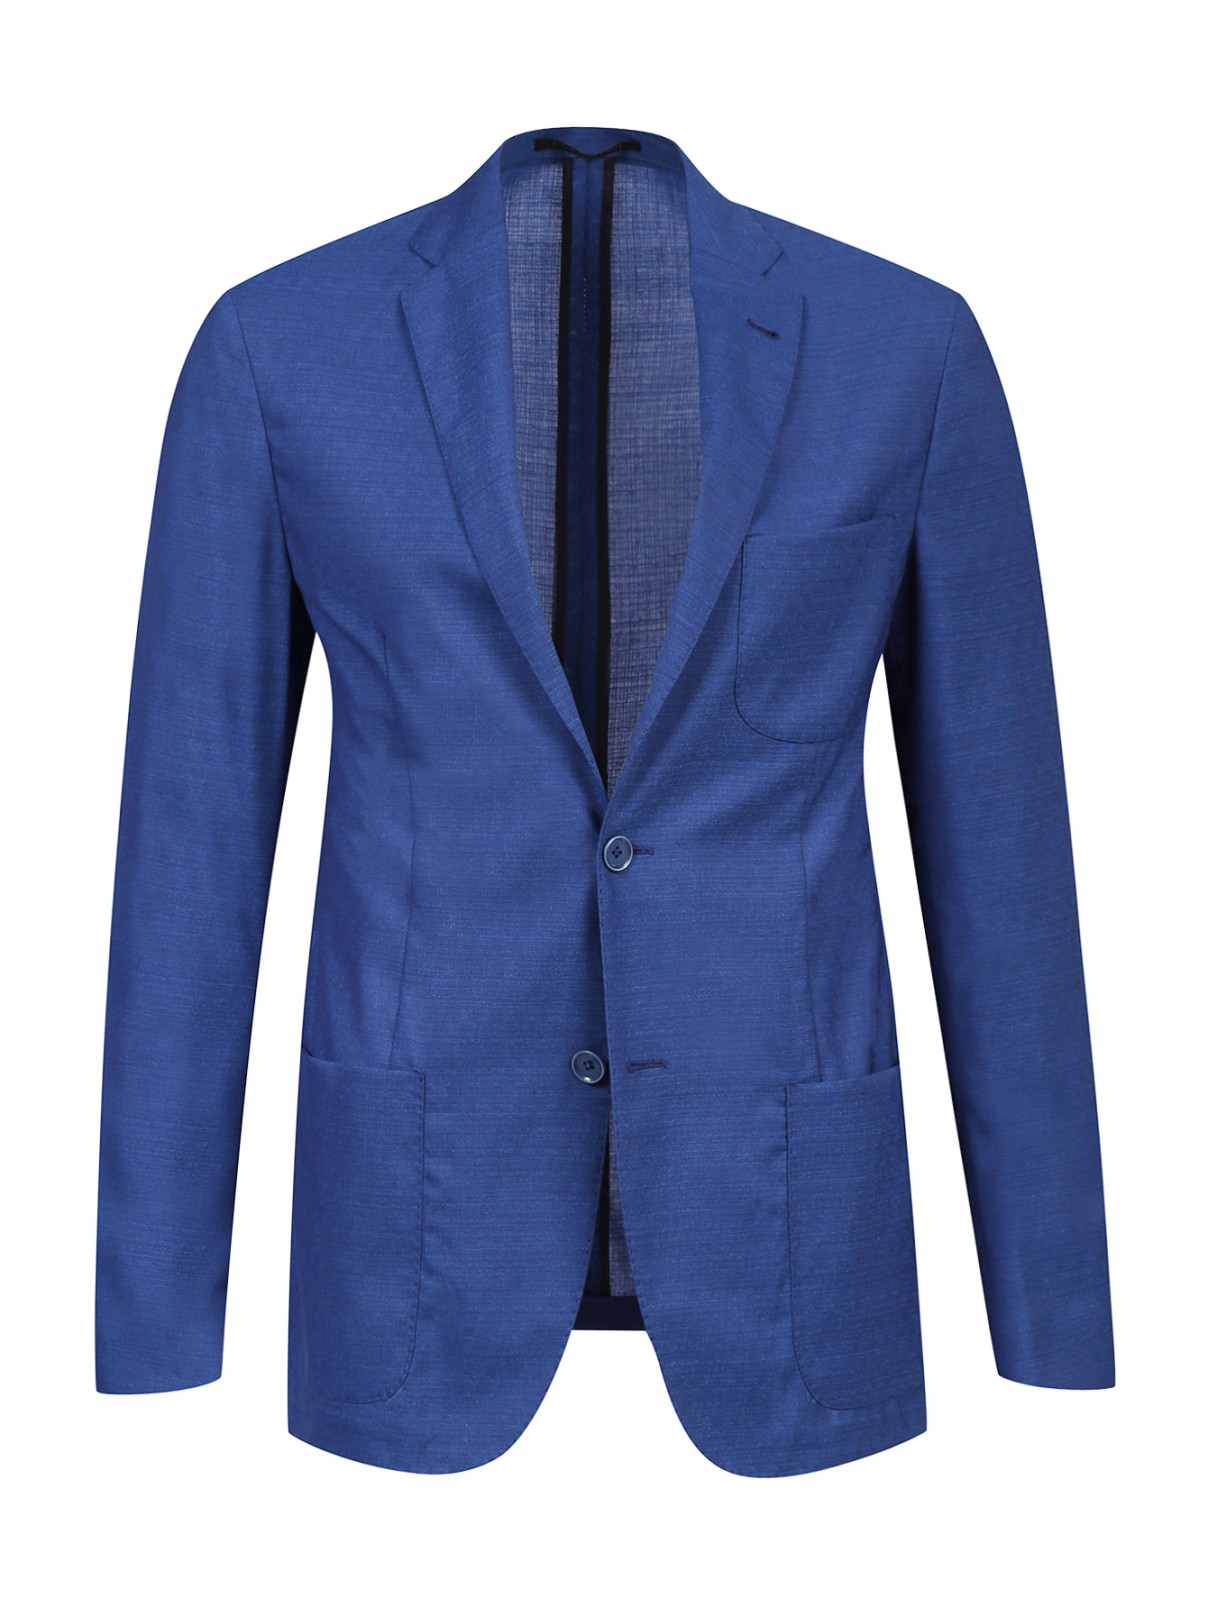 Легкий пиджак из шерсти Corneliani ID  –  Общий вид  – Цвет:  Синий